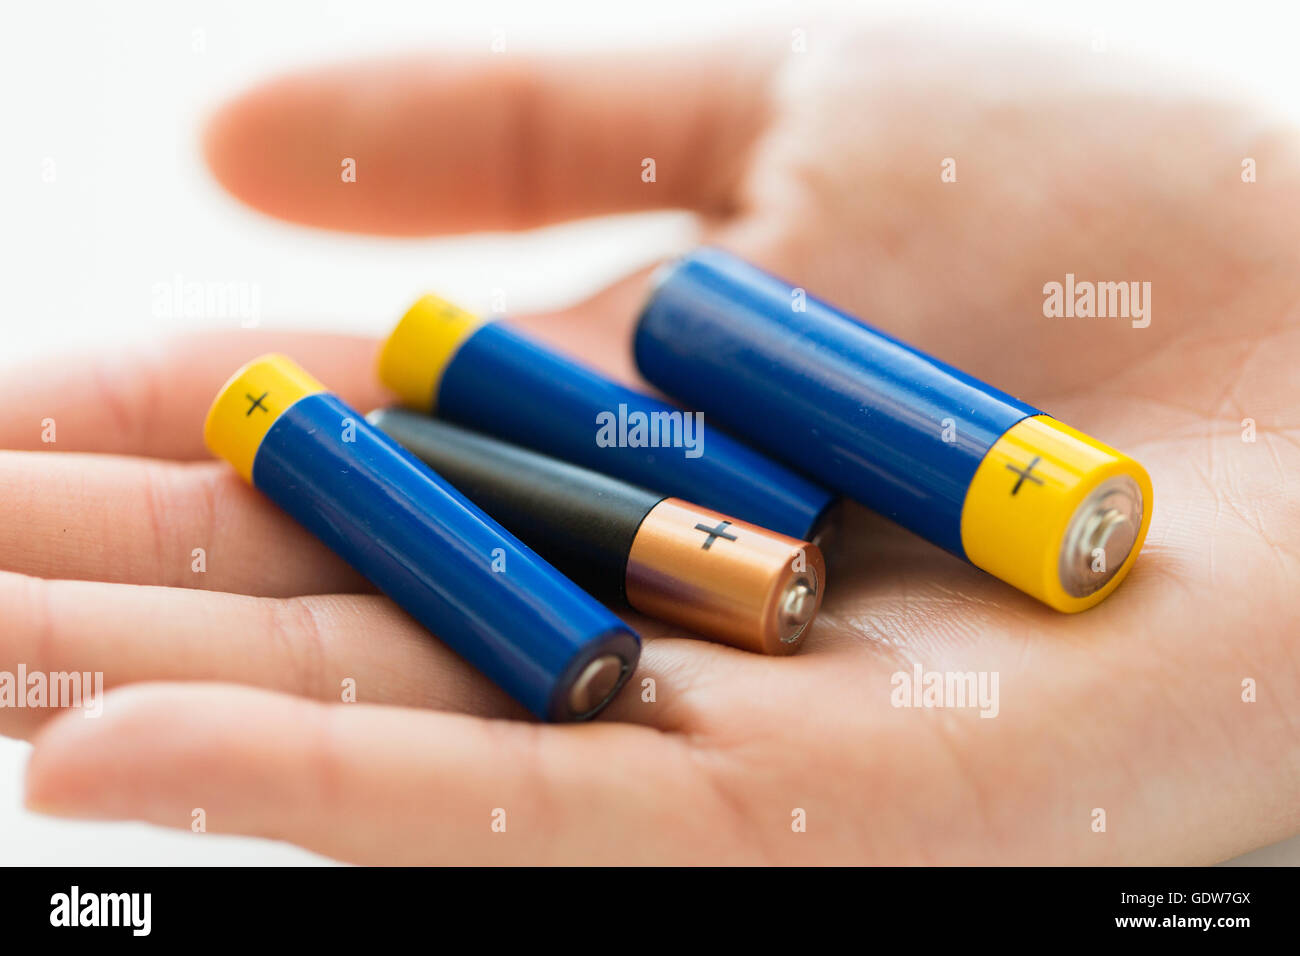 close up of hands holding alkaline batteries heap Stock Photo